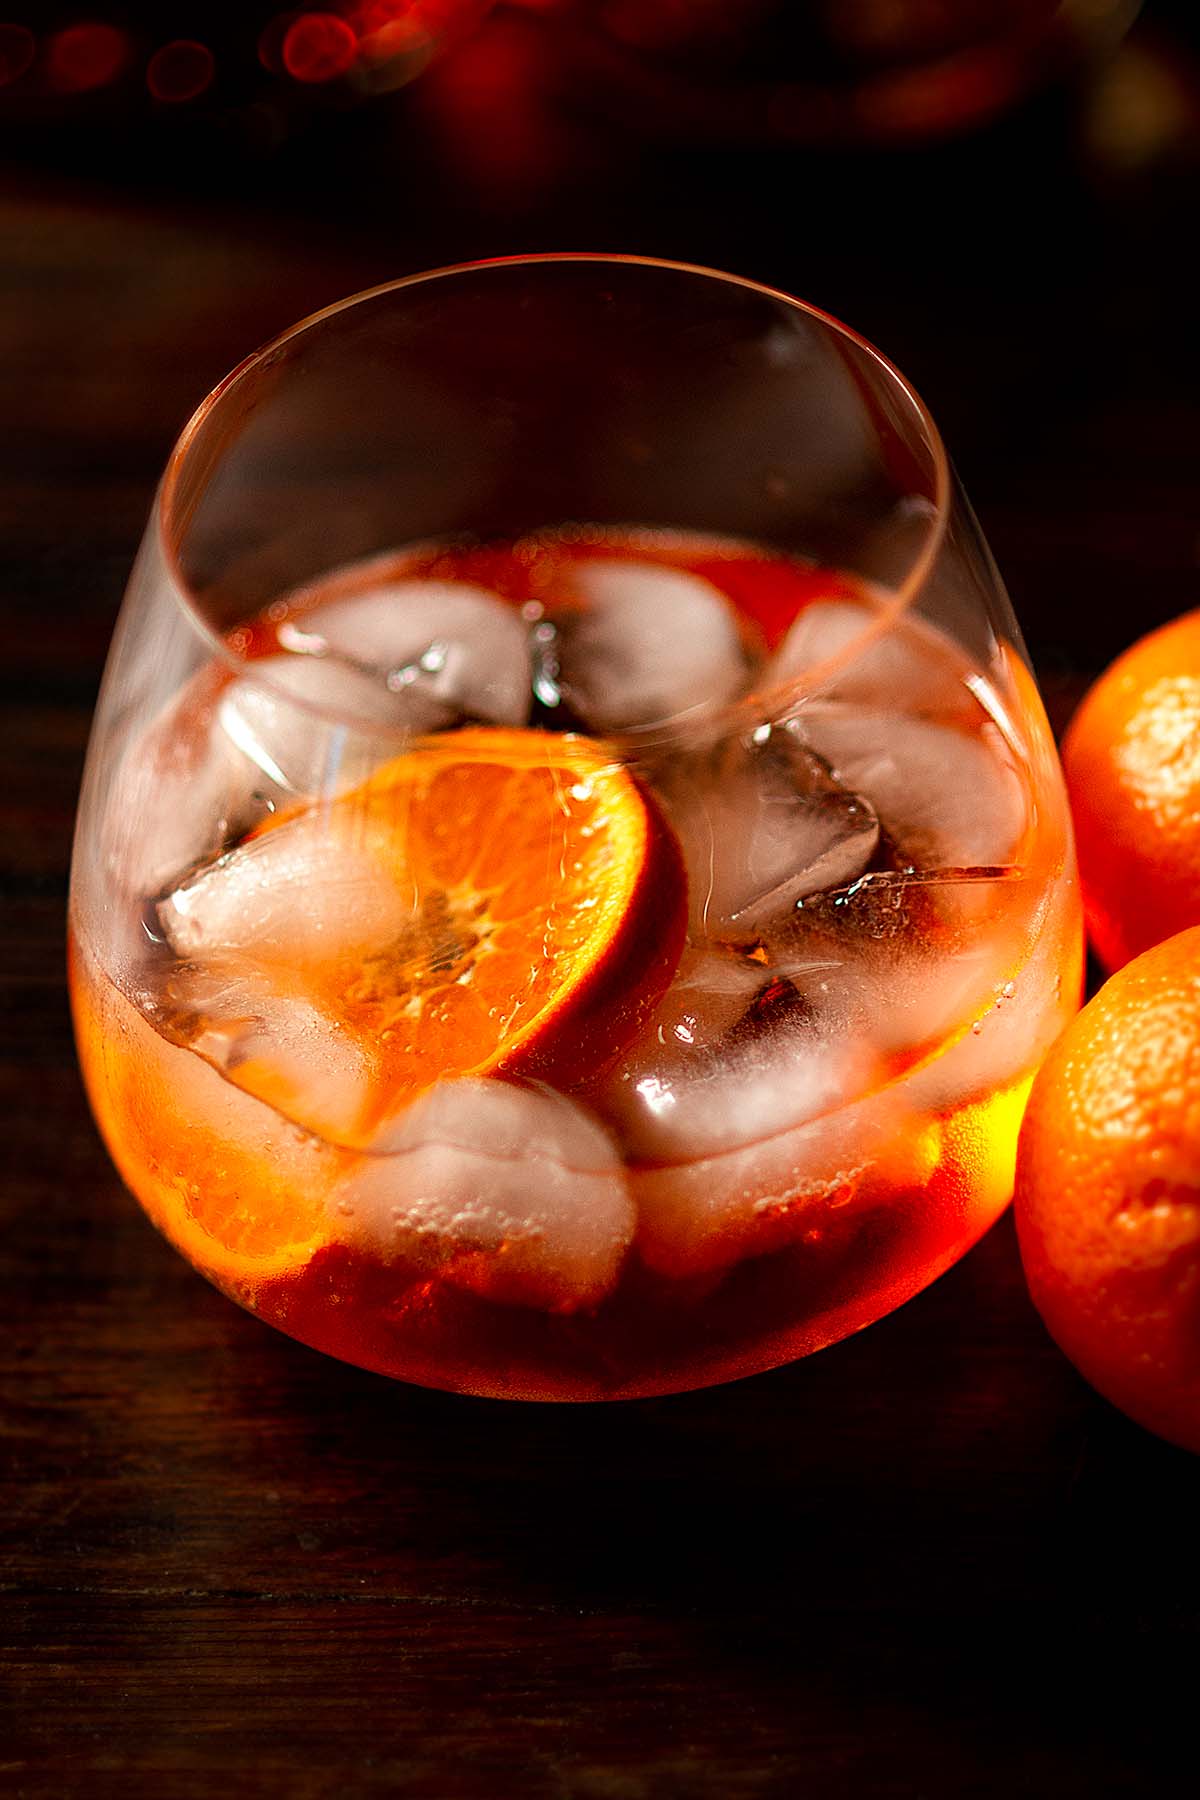 Slice of orange added to a wine glass of Aperol Spritz.